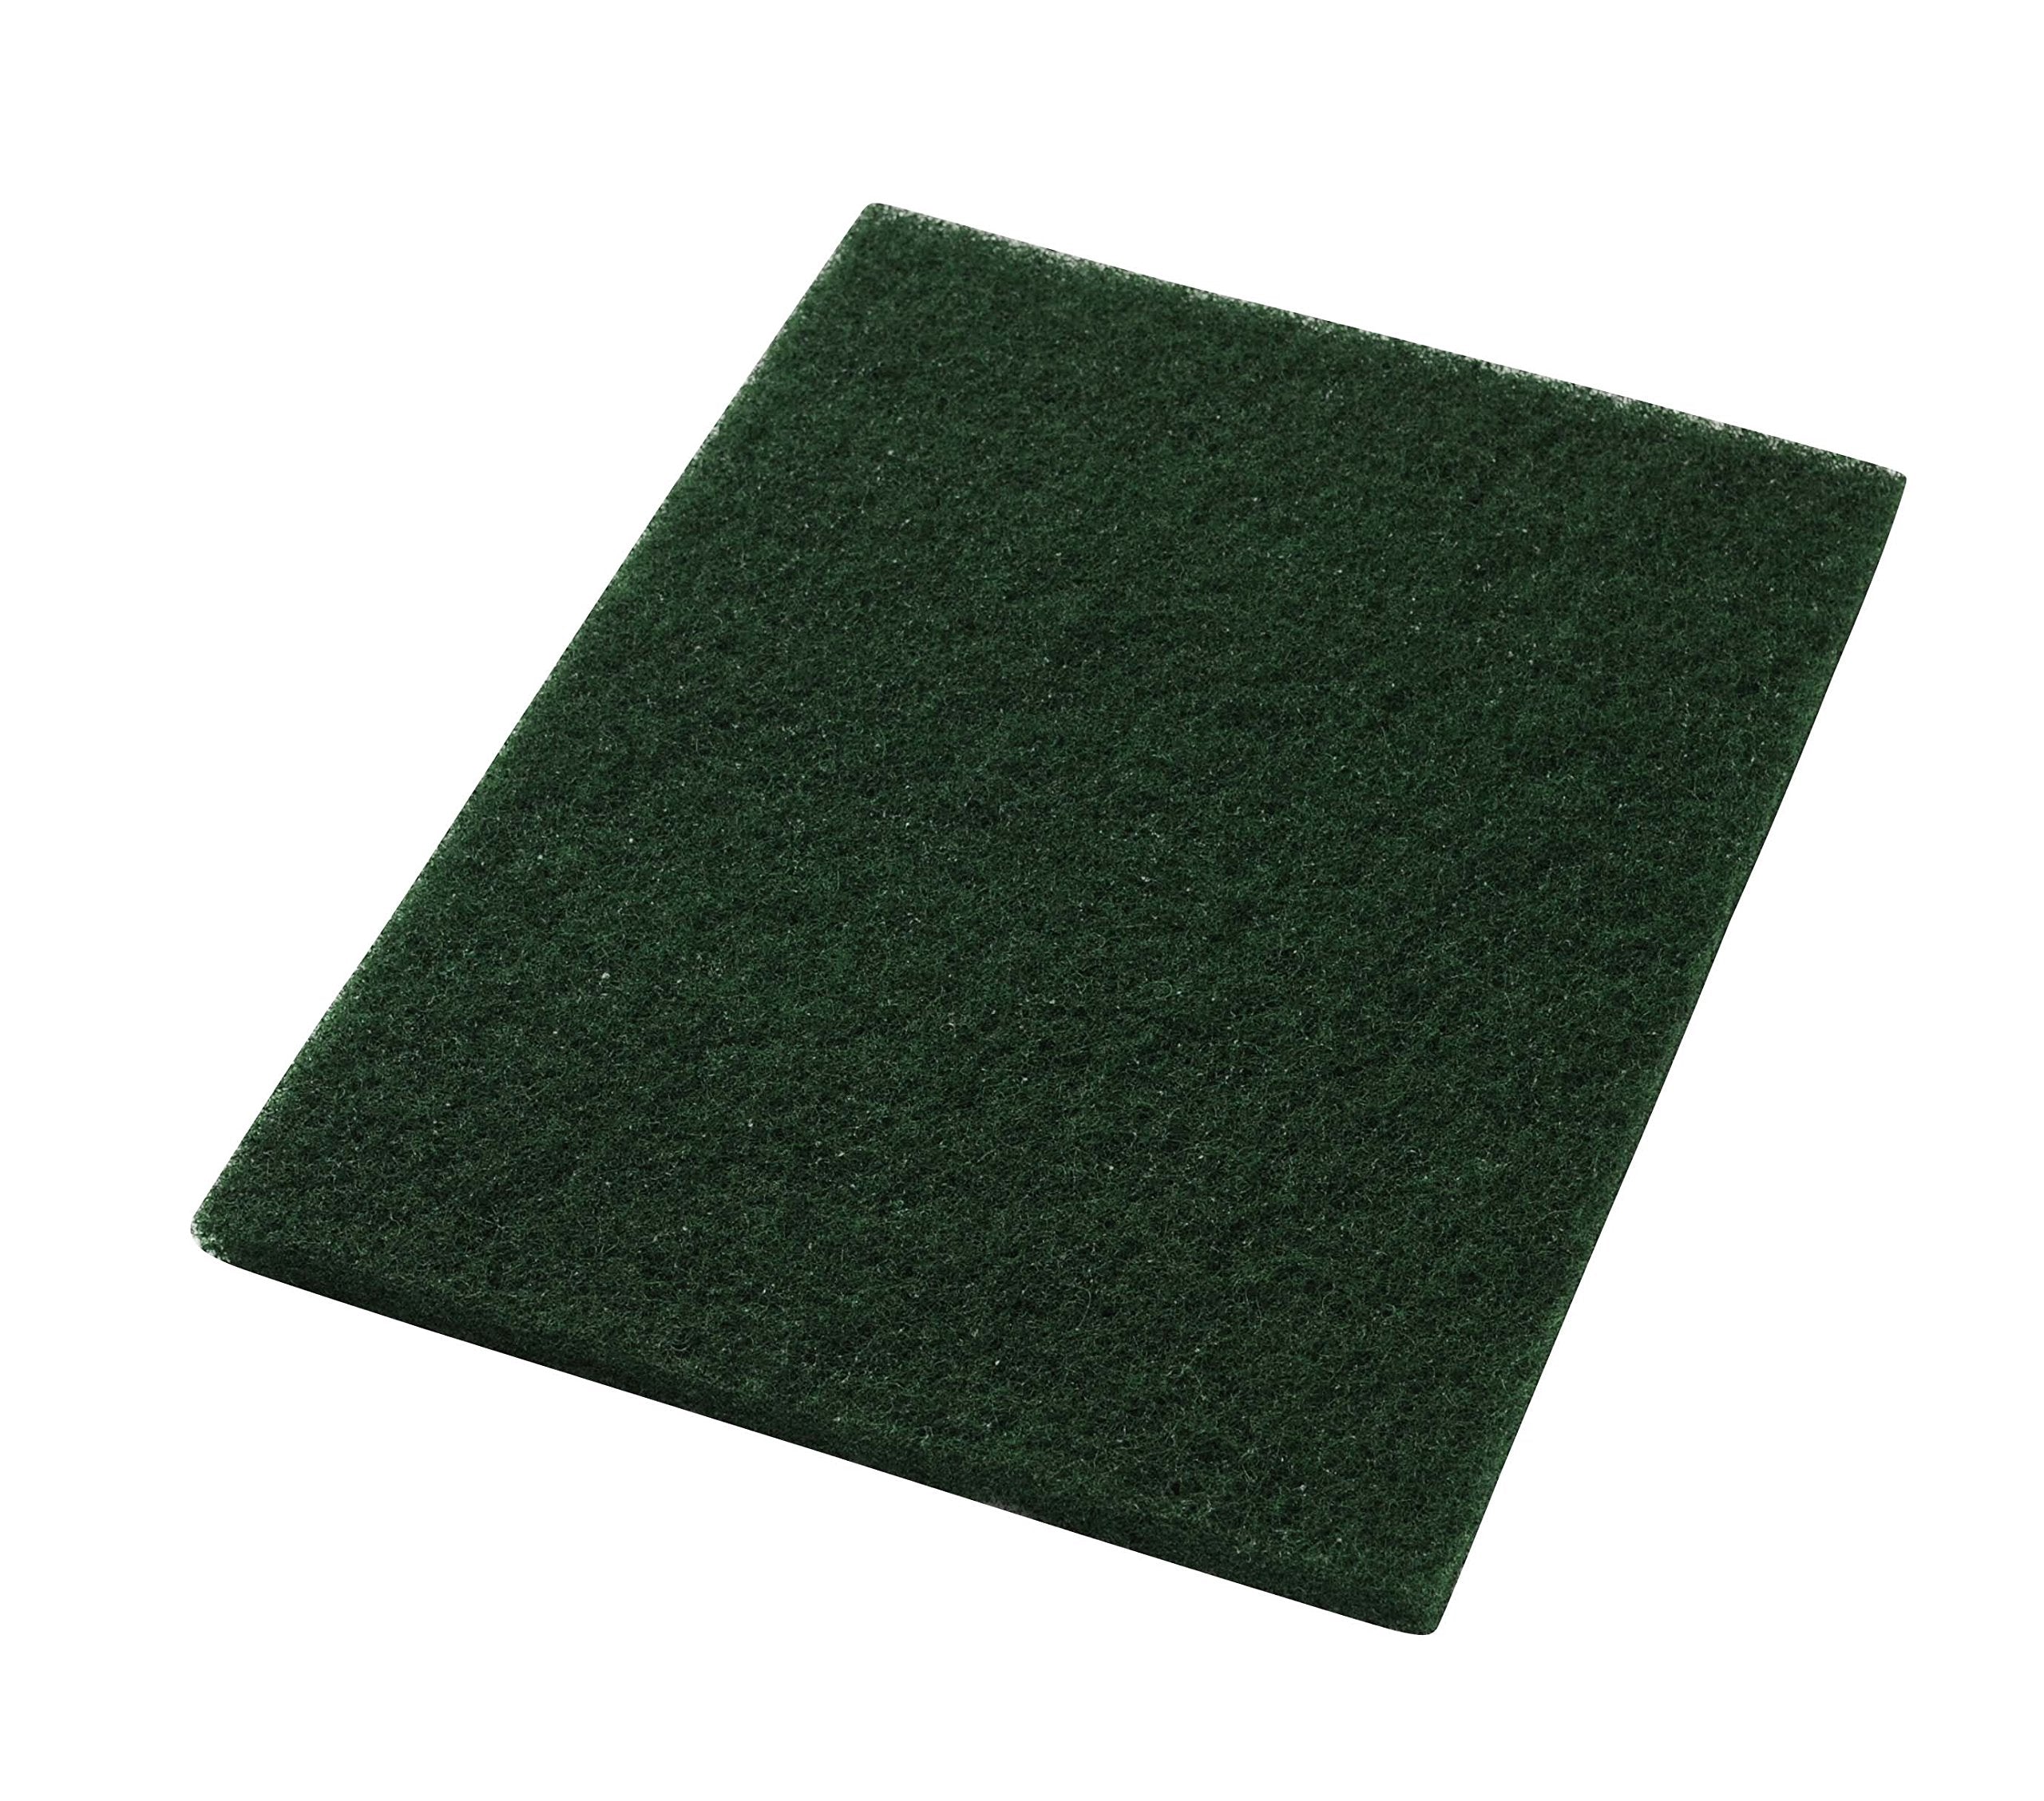 Americo Manufacturing 40031420 Green Scrub Floor Scrubbing Pad Rectangle (5 Pack), 14" x 20"